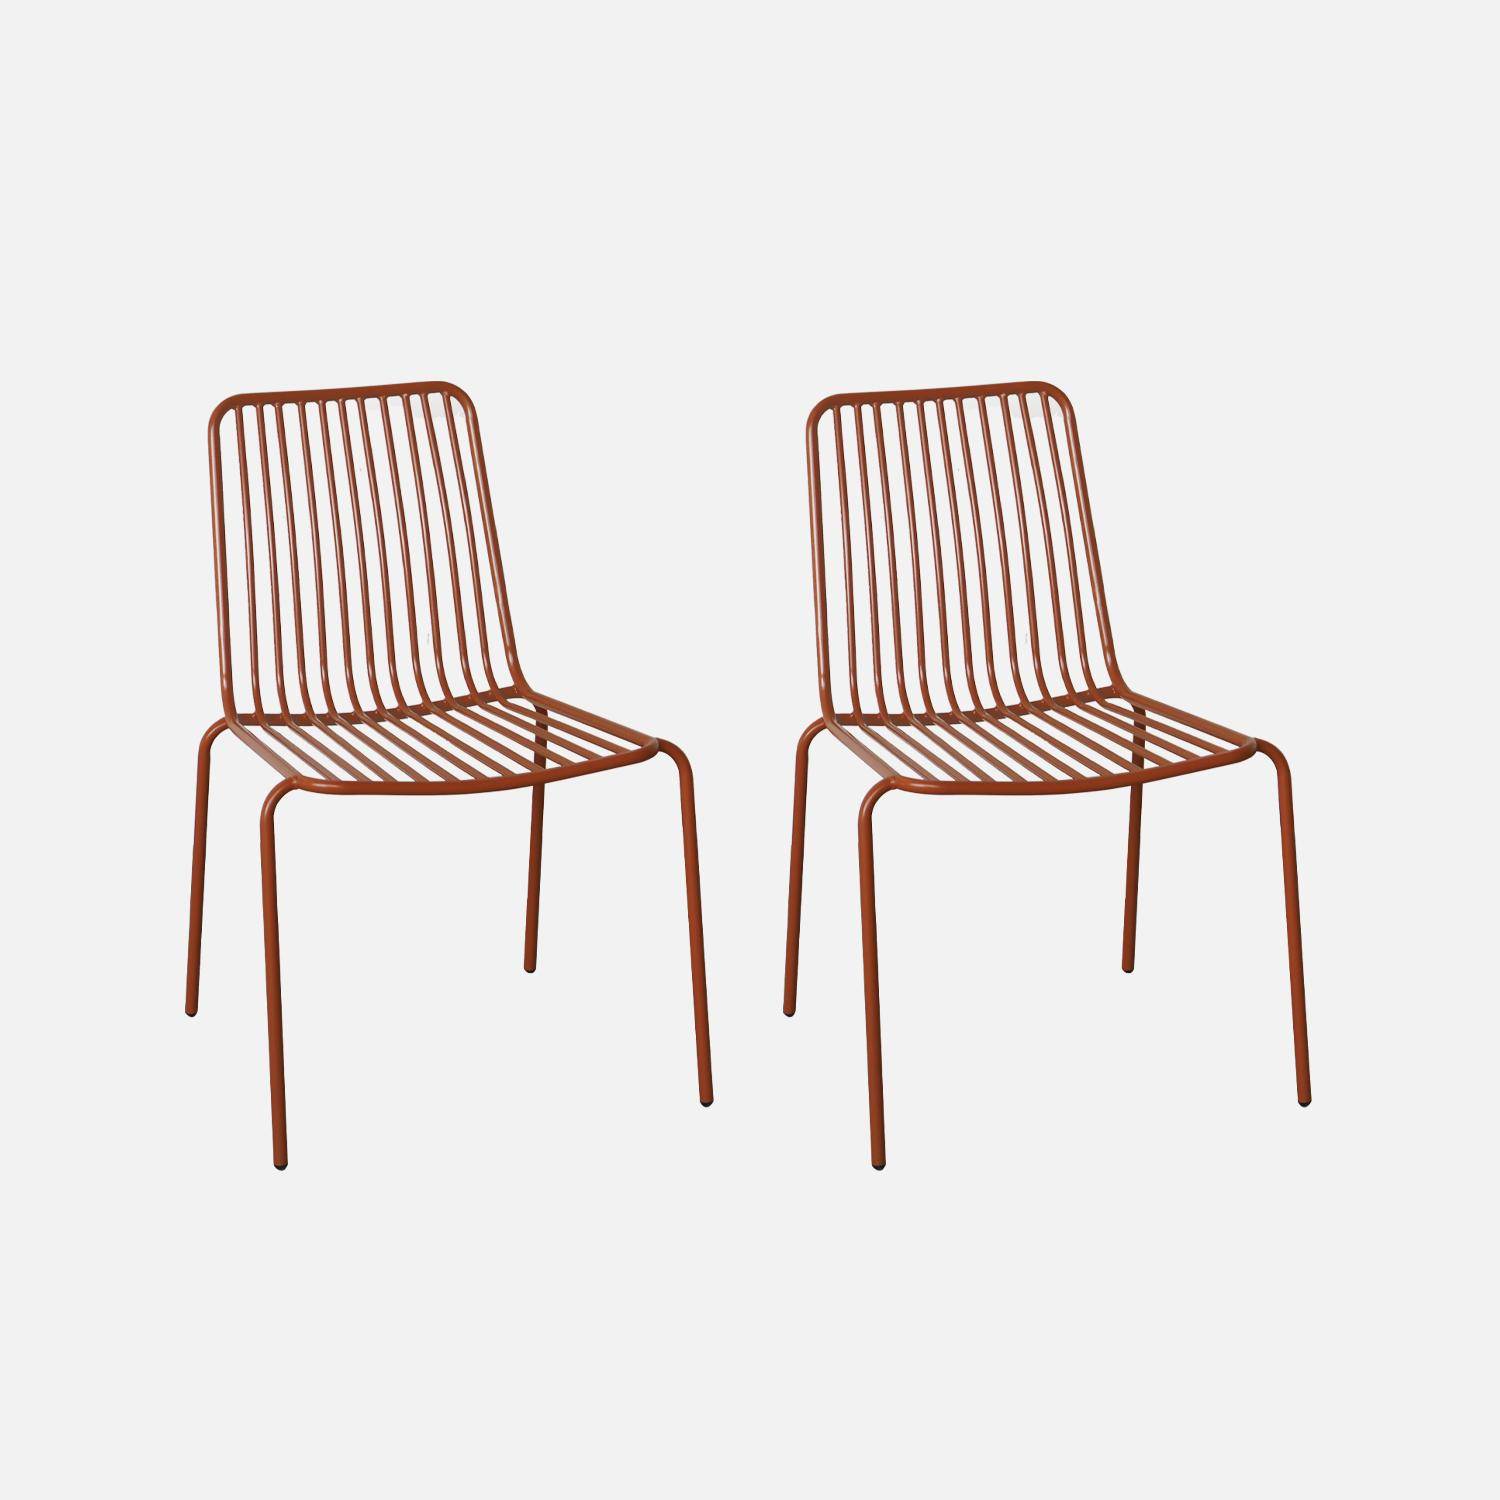 Juego de 2 sillas de jardín de acero terracota, apilables, diseño lineal Photo1